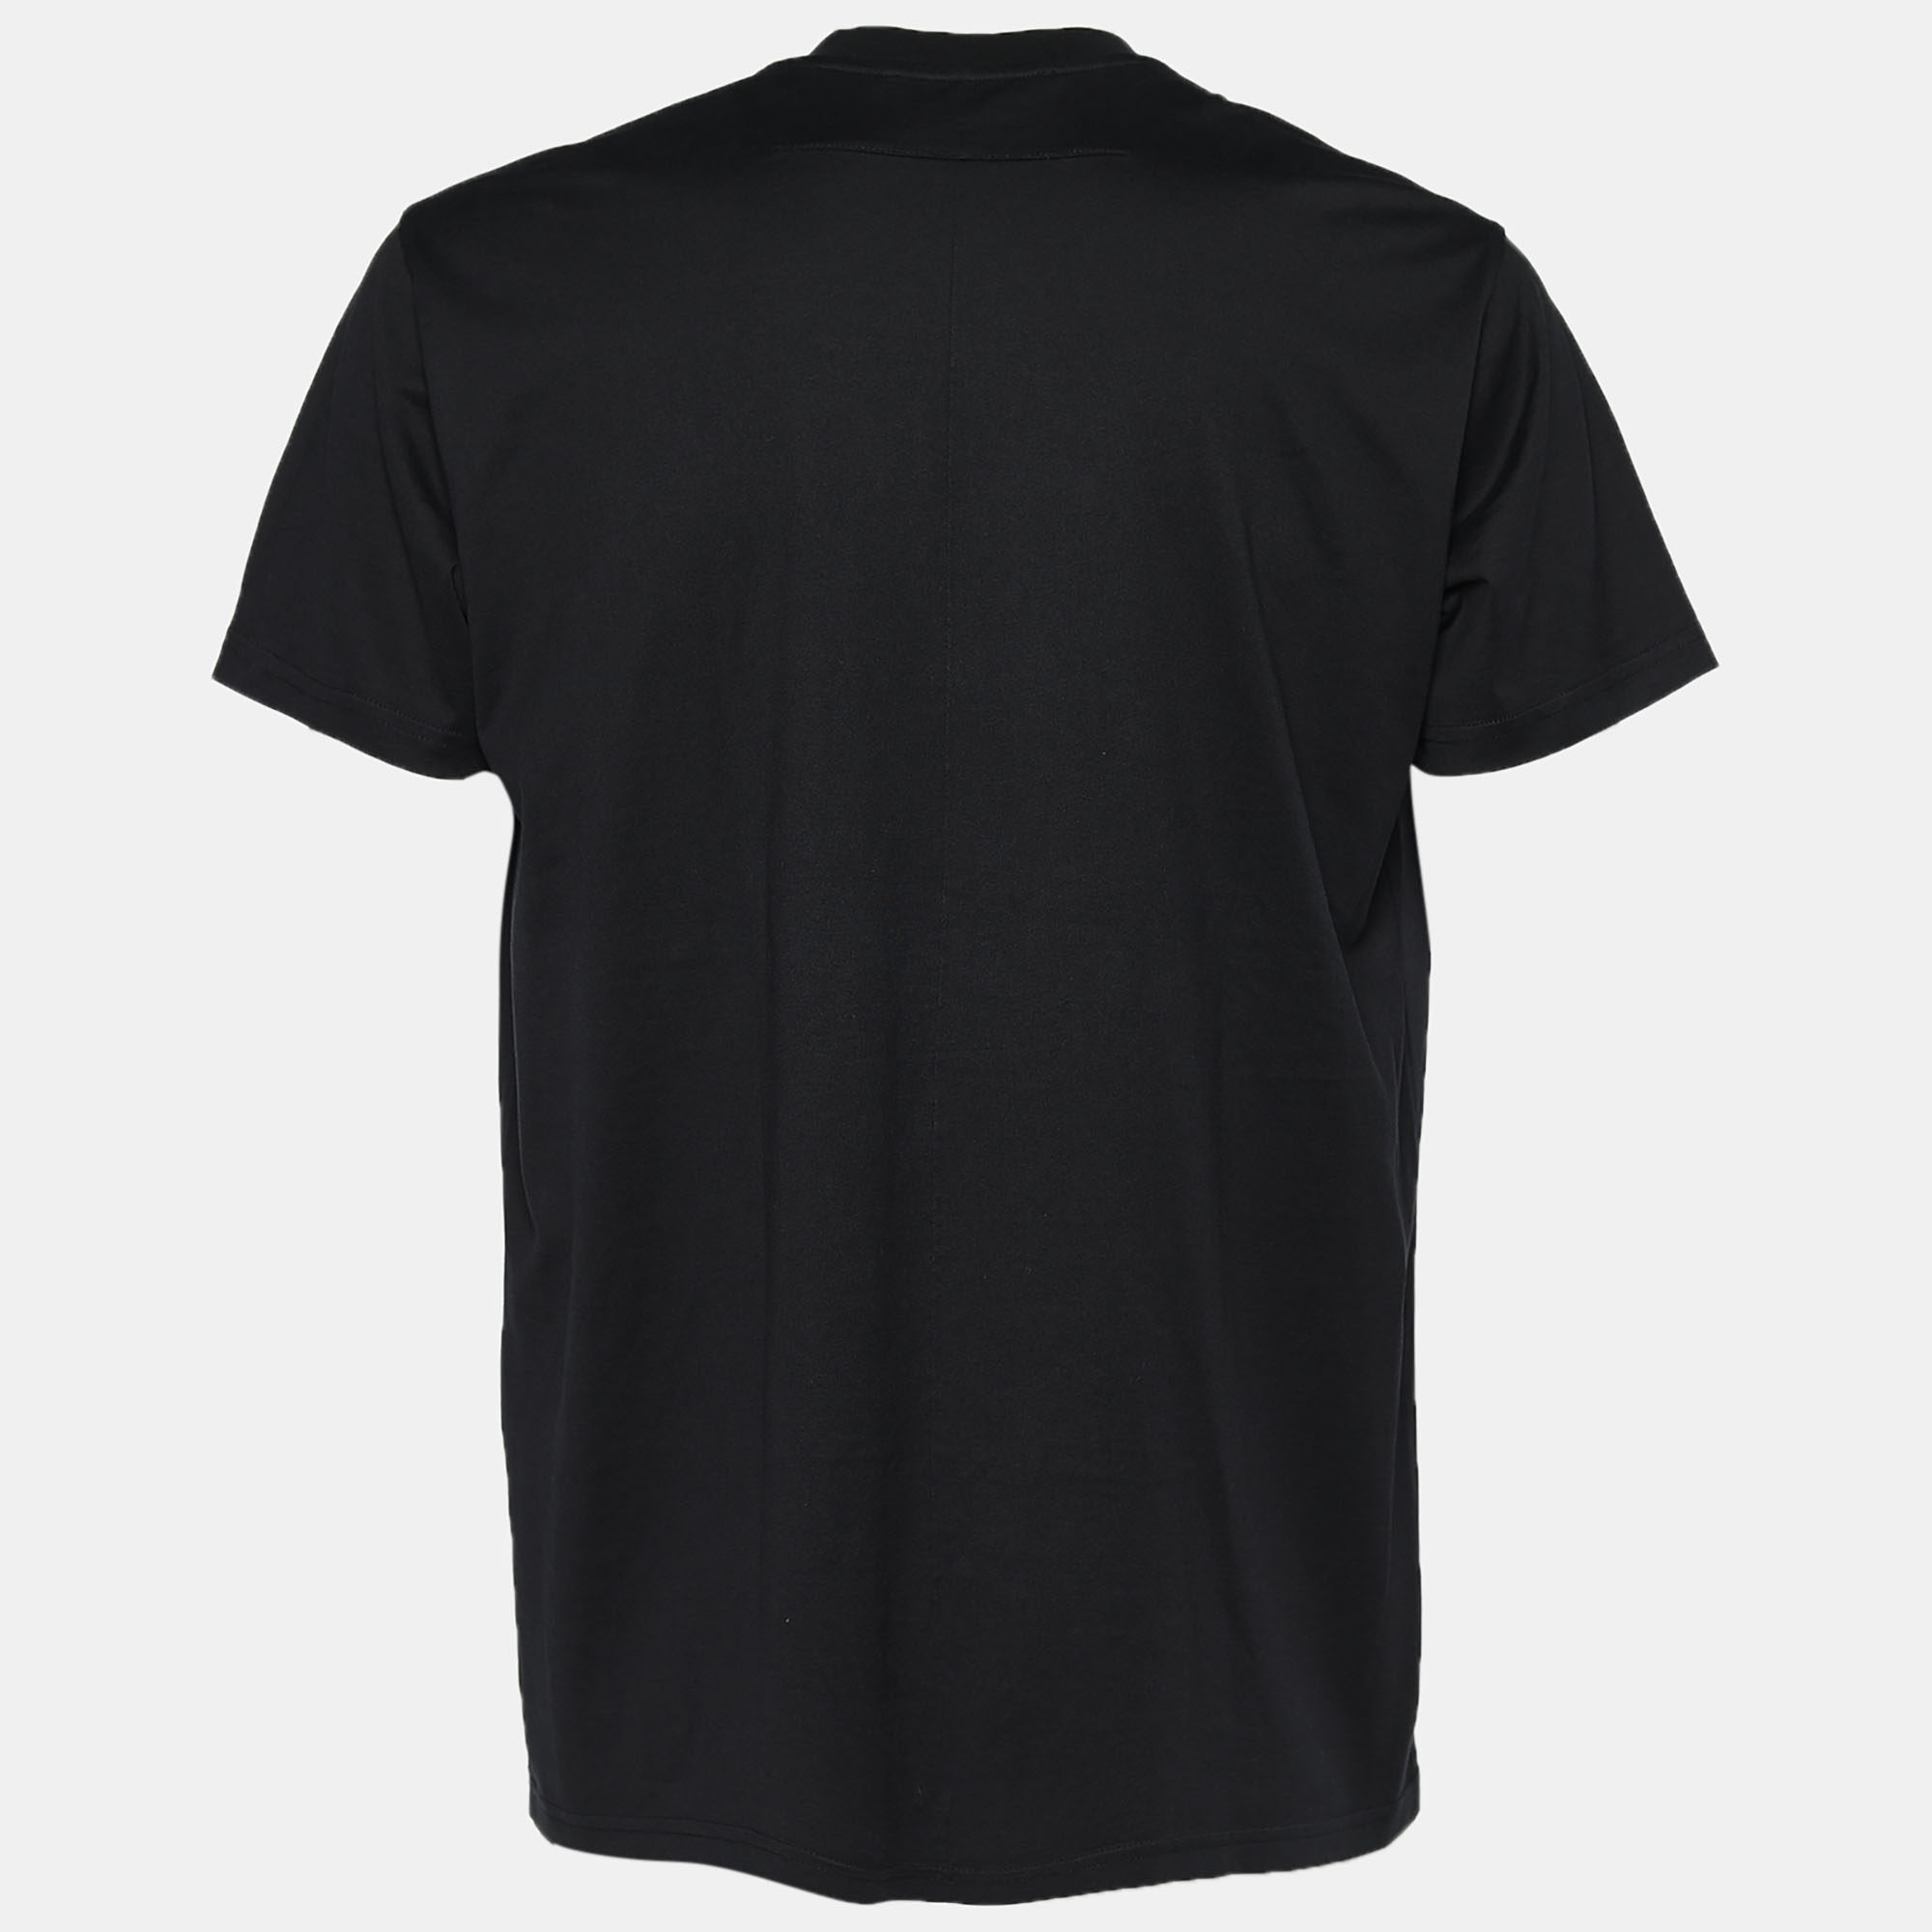 

Givenchy Black Shark Print Cotton Knit Short Sleeve T-Shirt